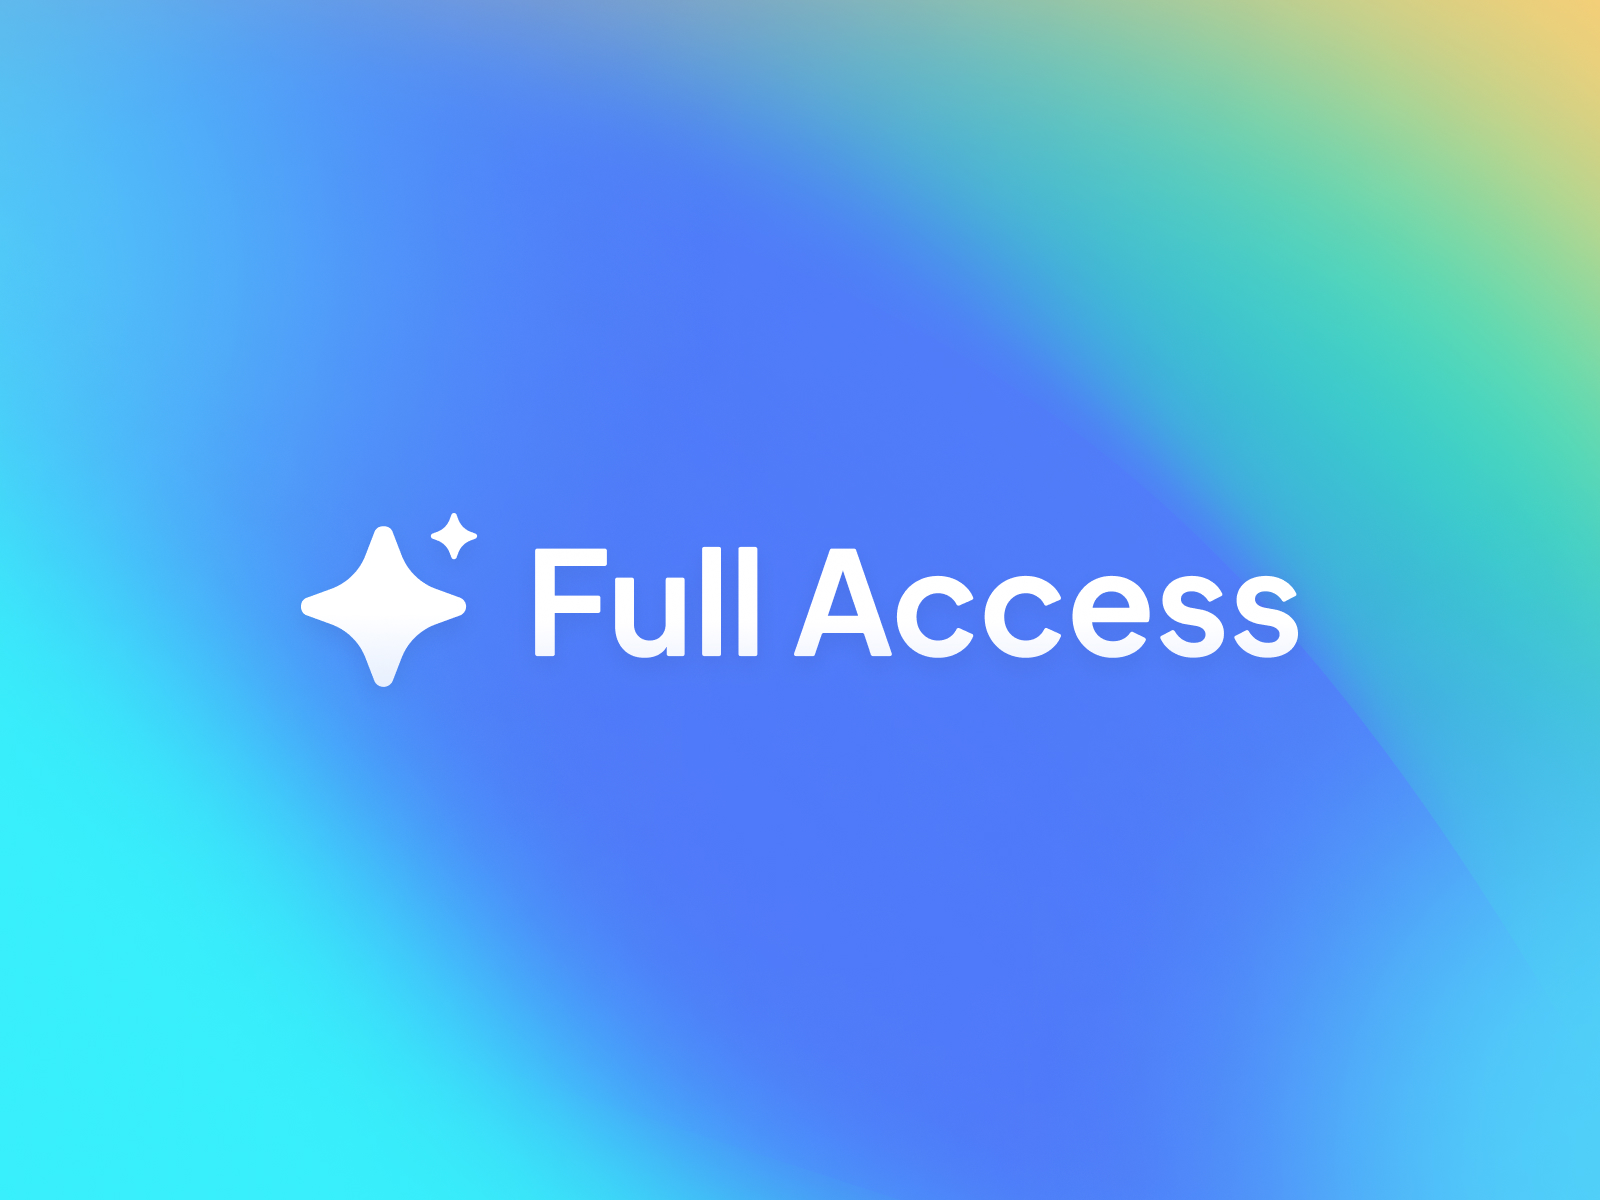 Uiscore Full Access